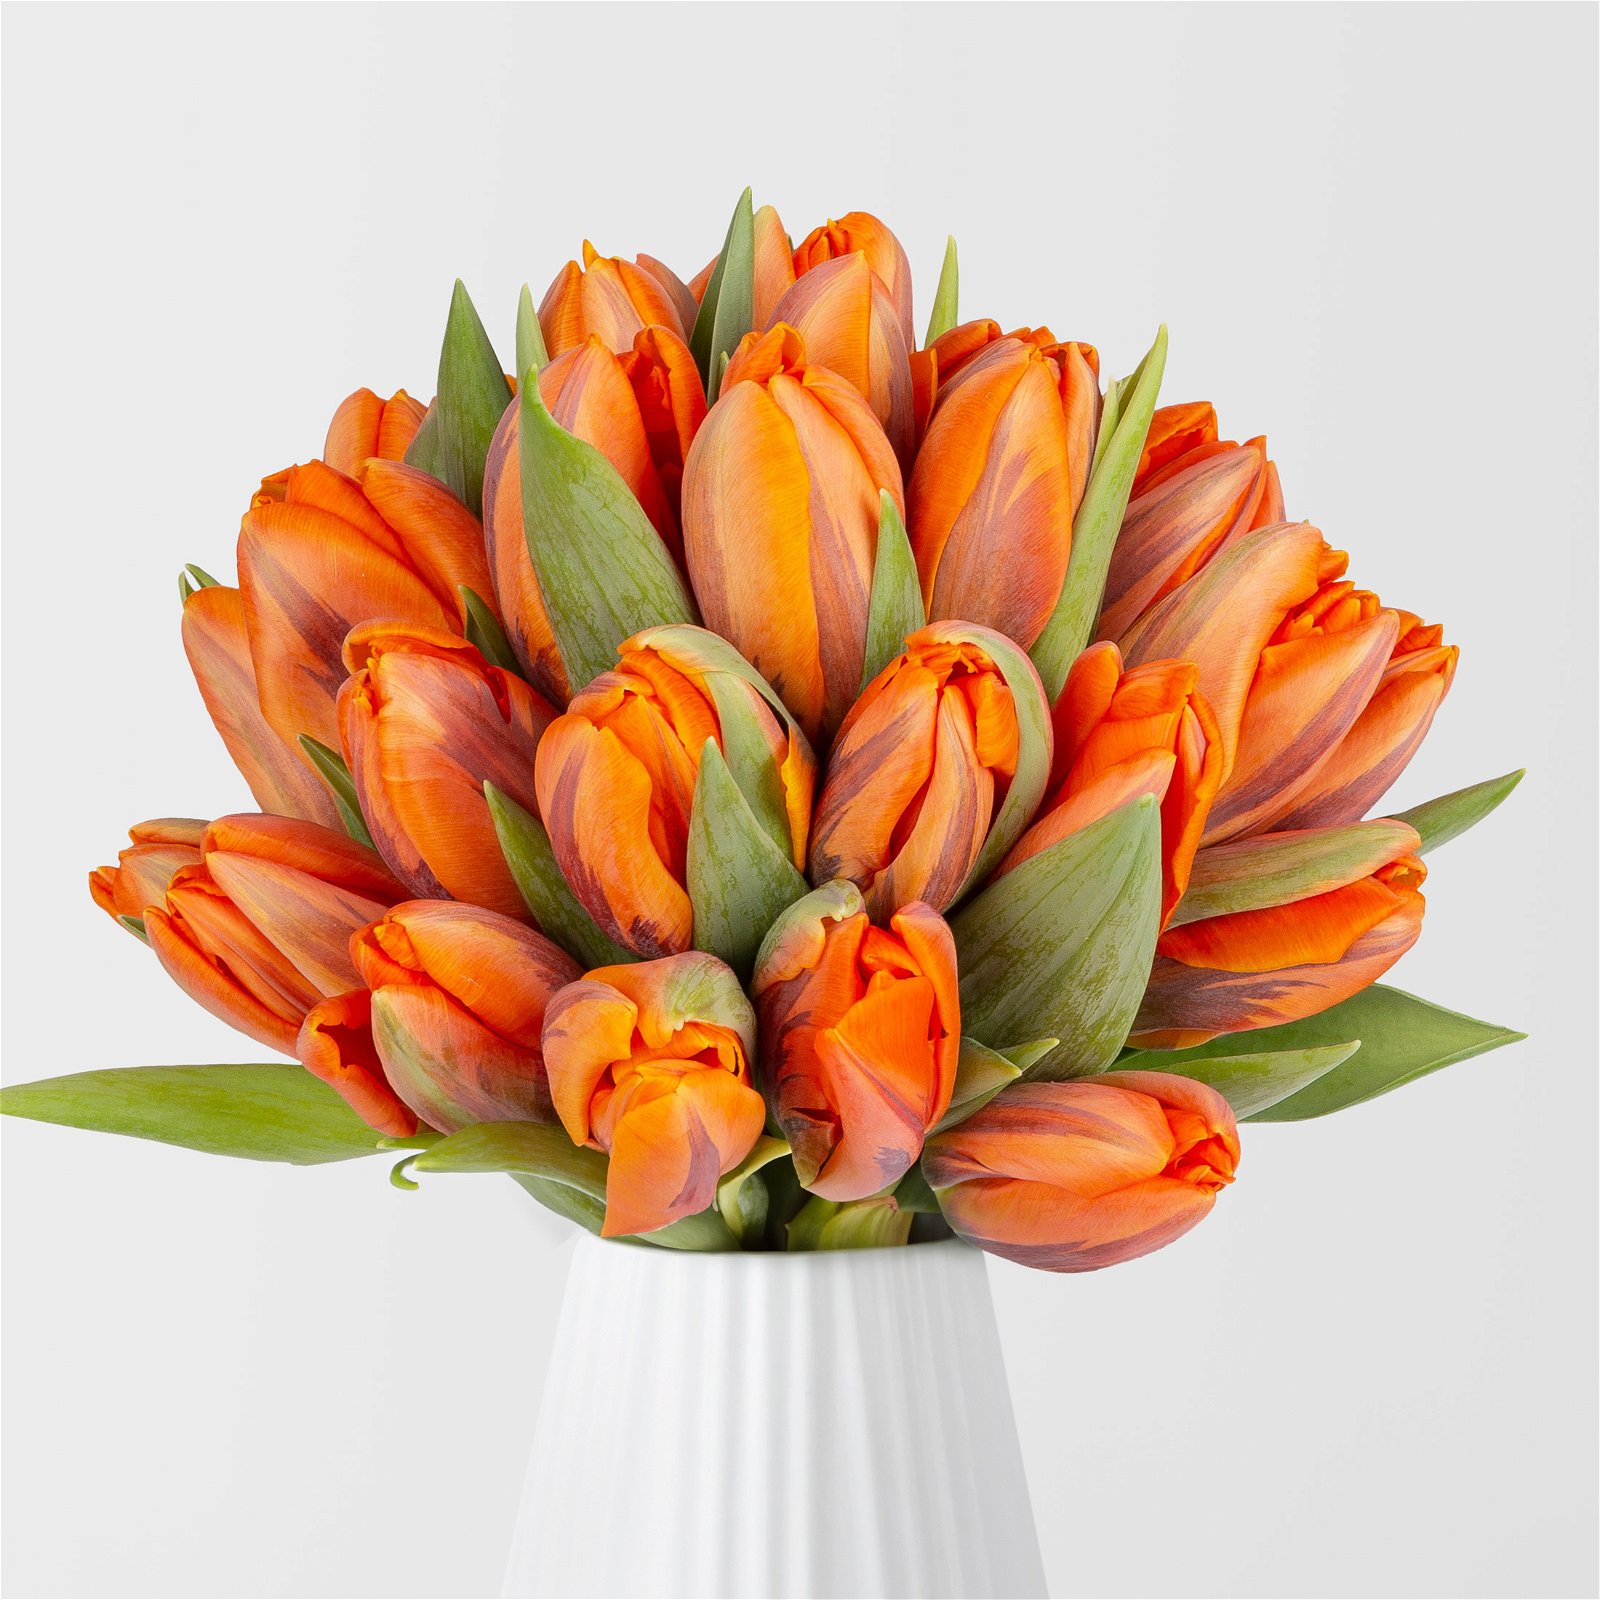 Blumenbund Tulpen 'Princess Irene', 30er-Bund, orange, inkl. gratis Grußkarte